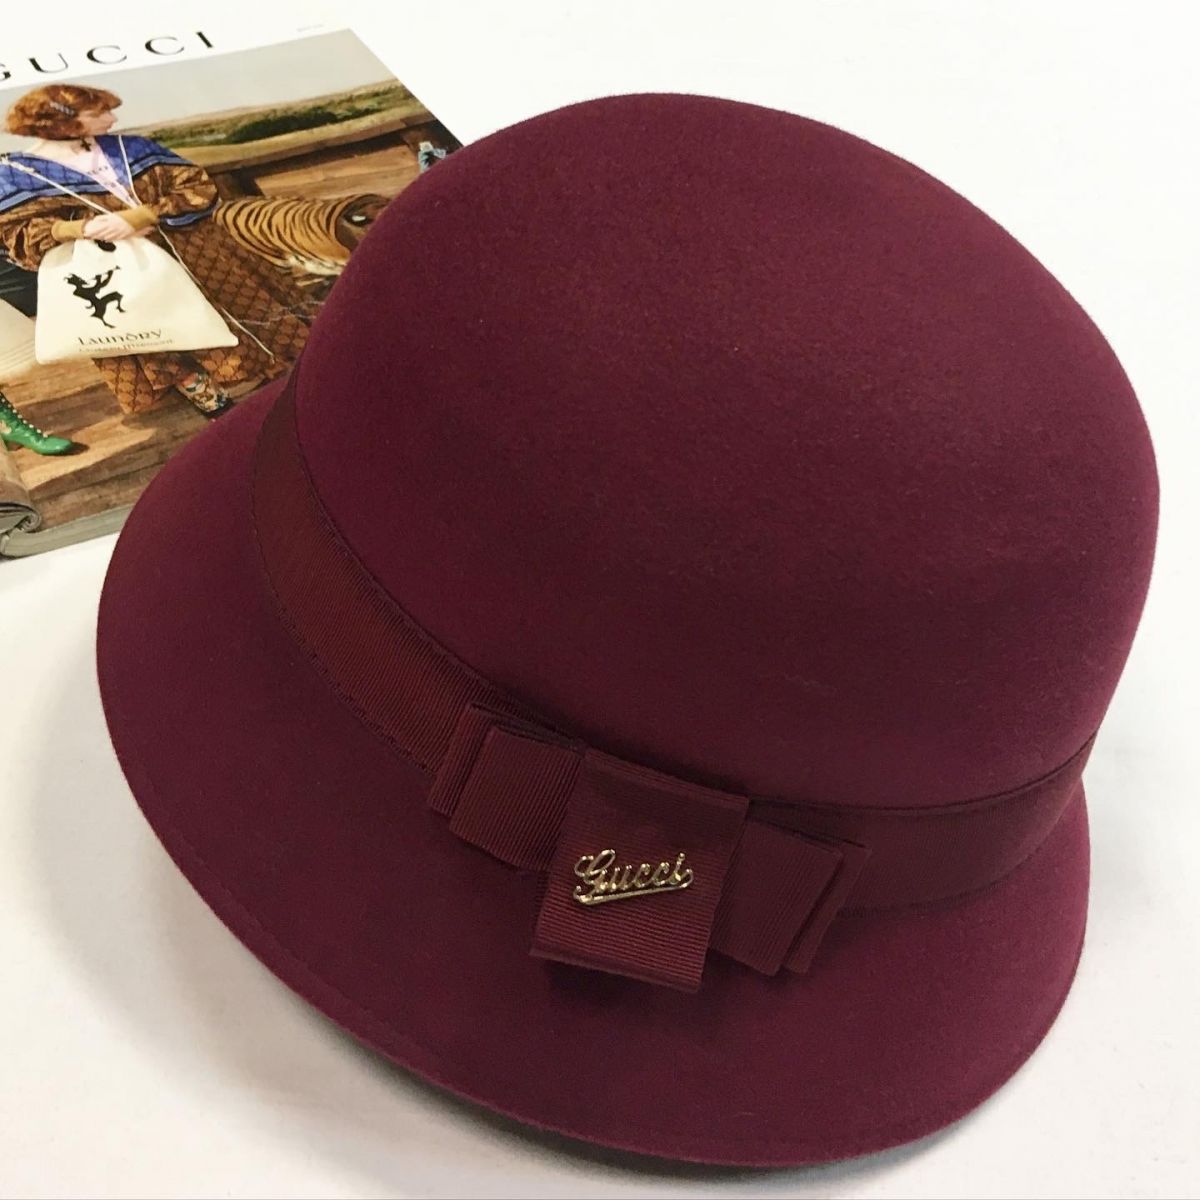 Шляпа Gucci  размер М цена 18 463 руб